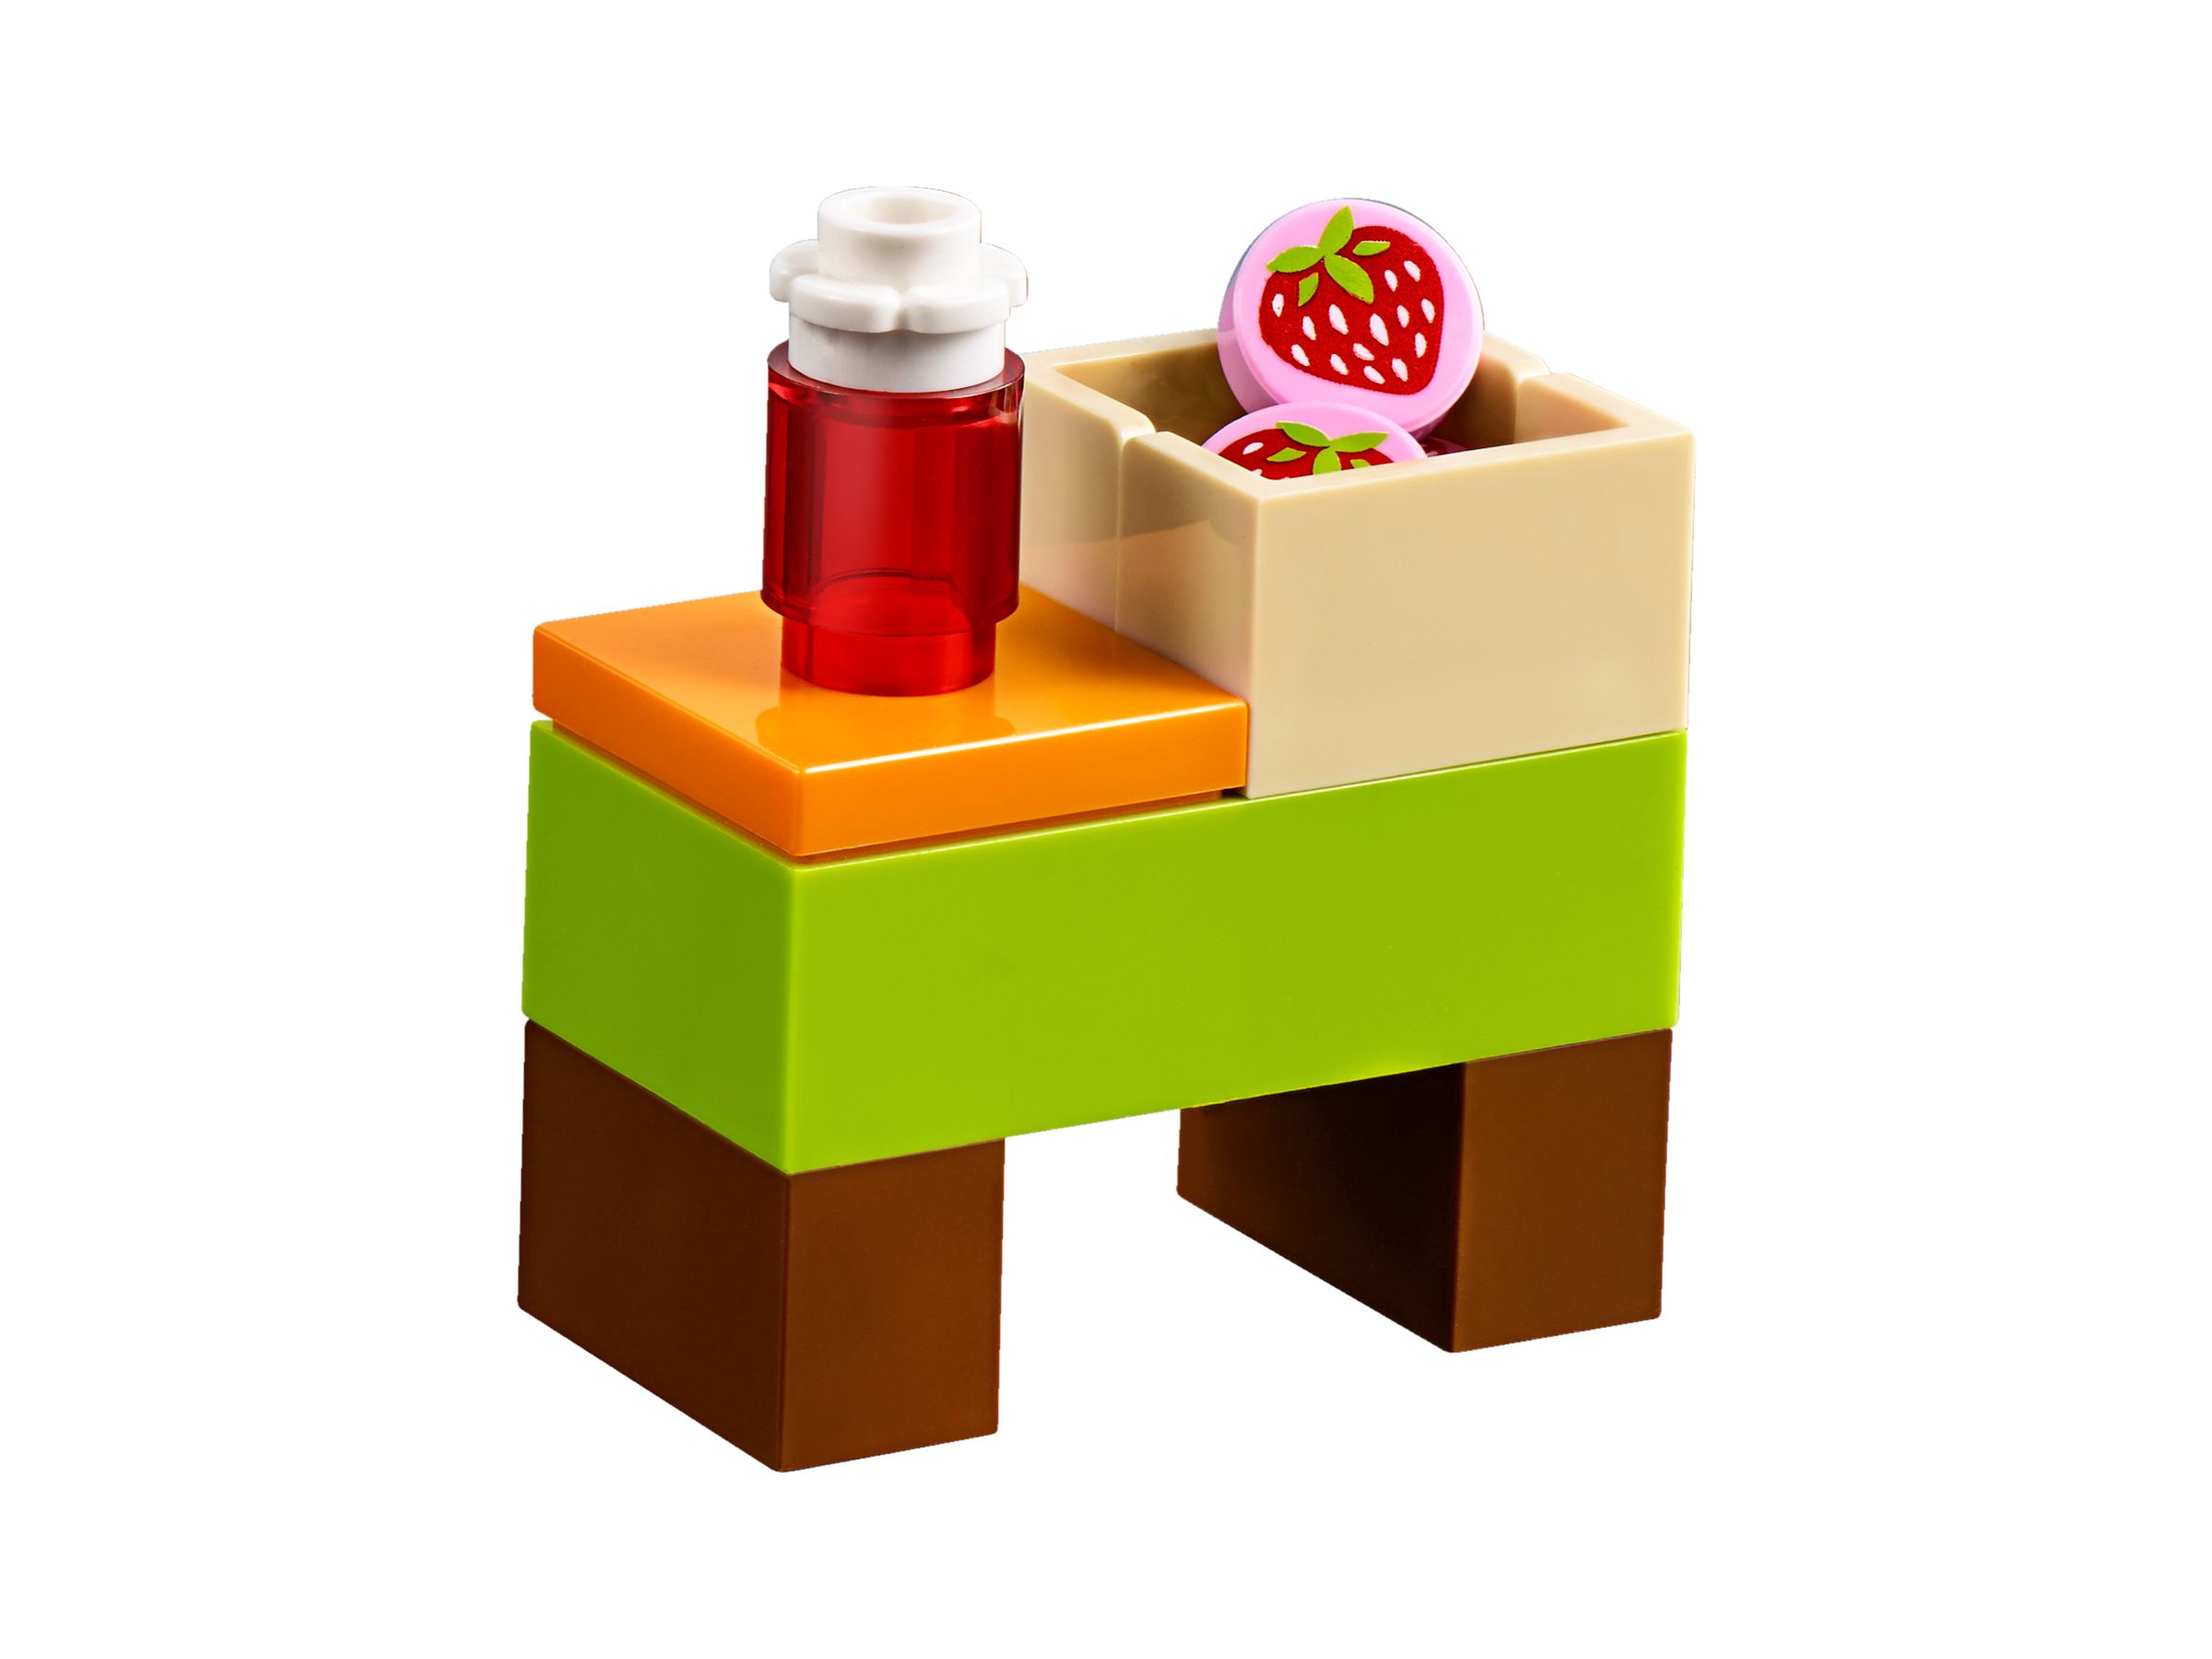 LEGO Juniors 10749 Mias Bio Foodtruck LEGO_10749_alt6.jpg